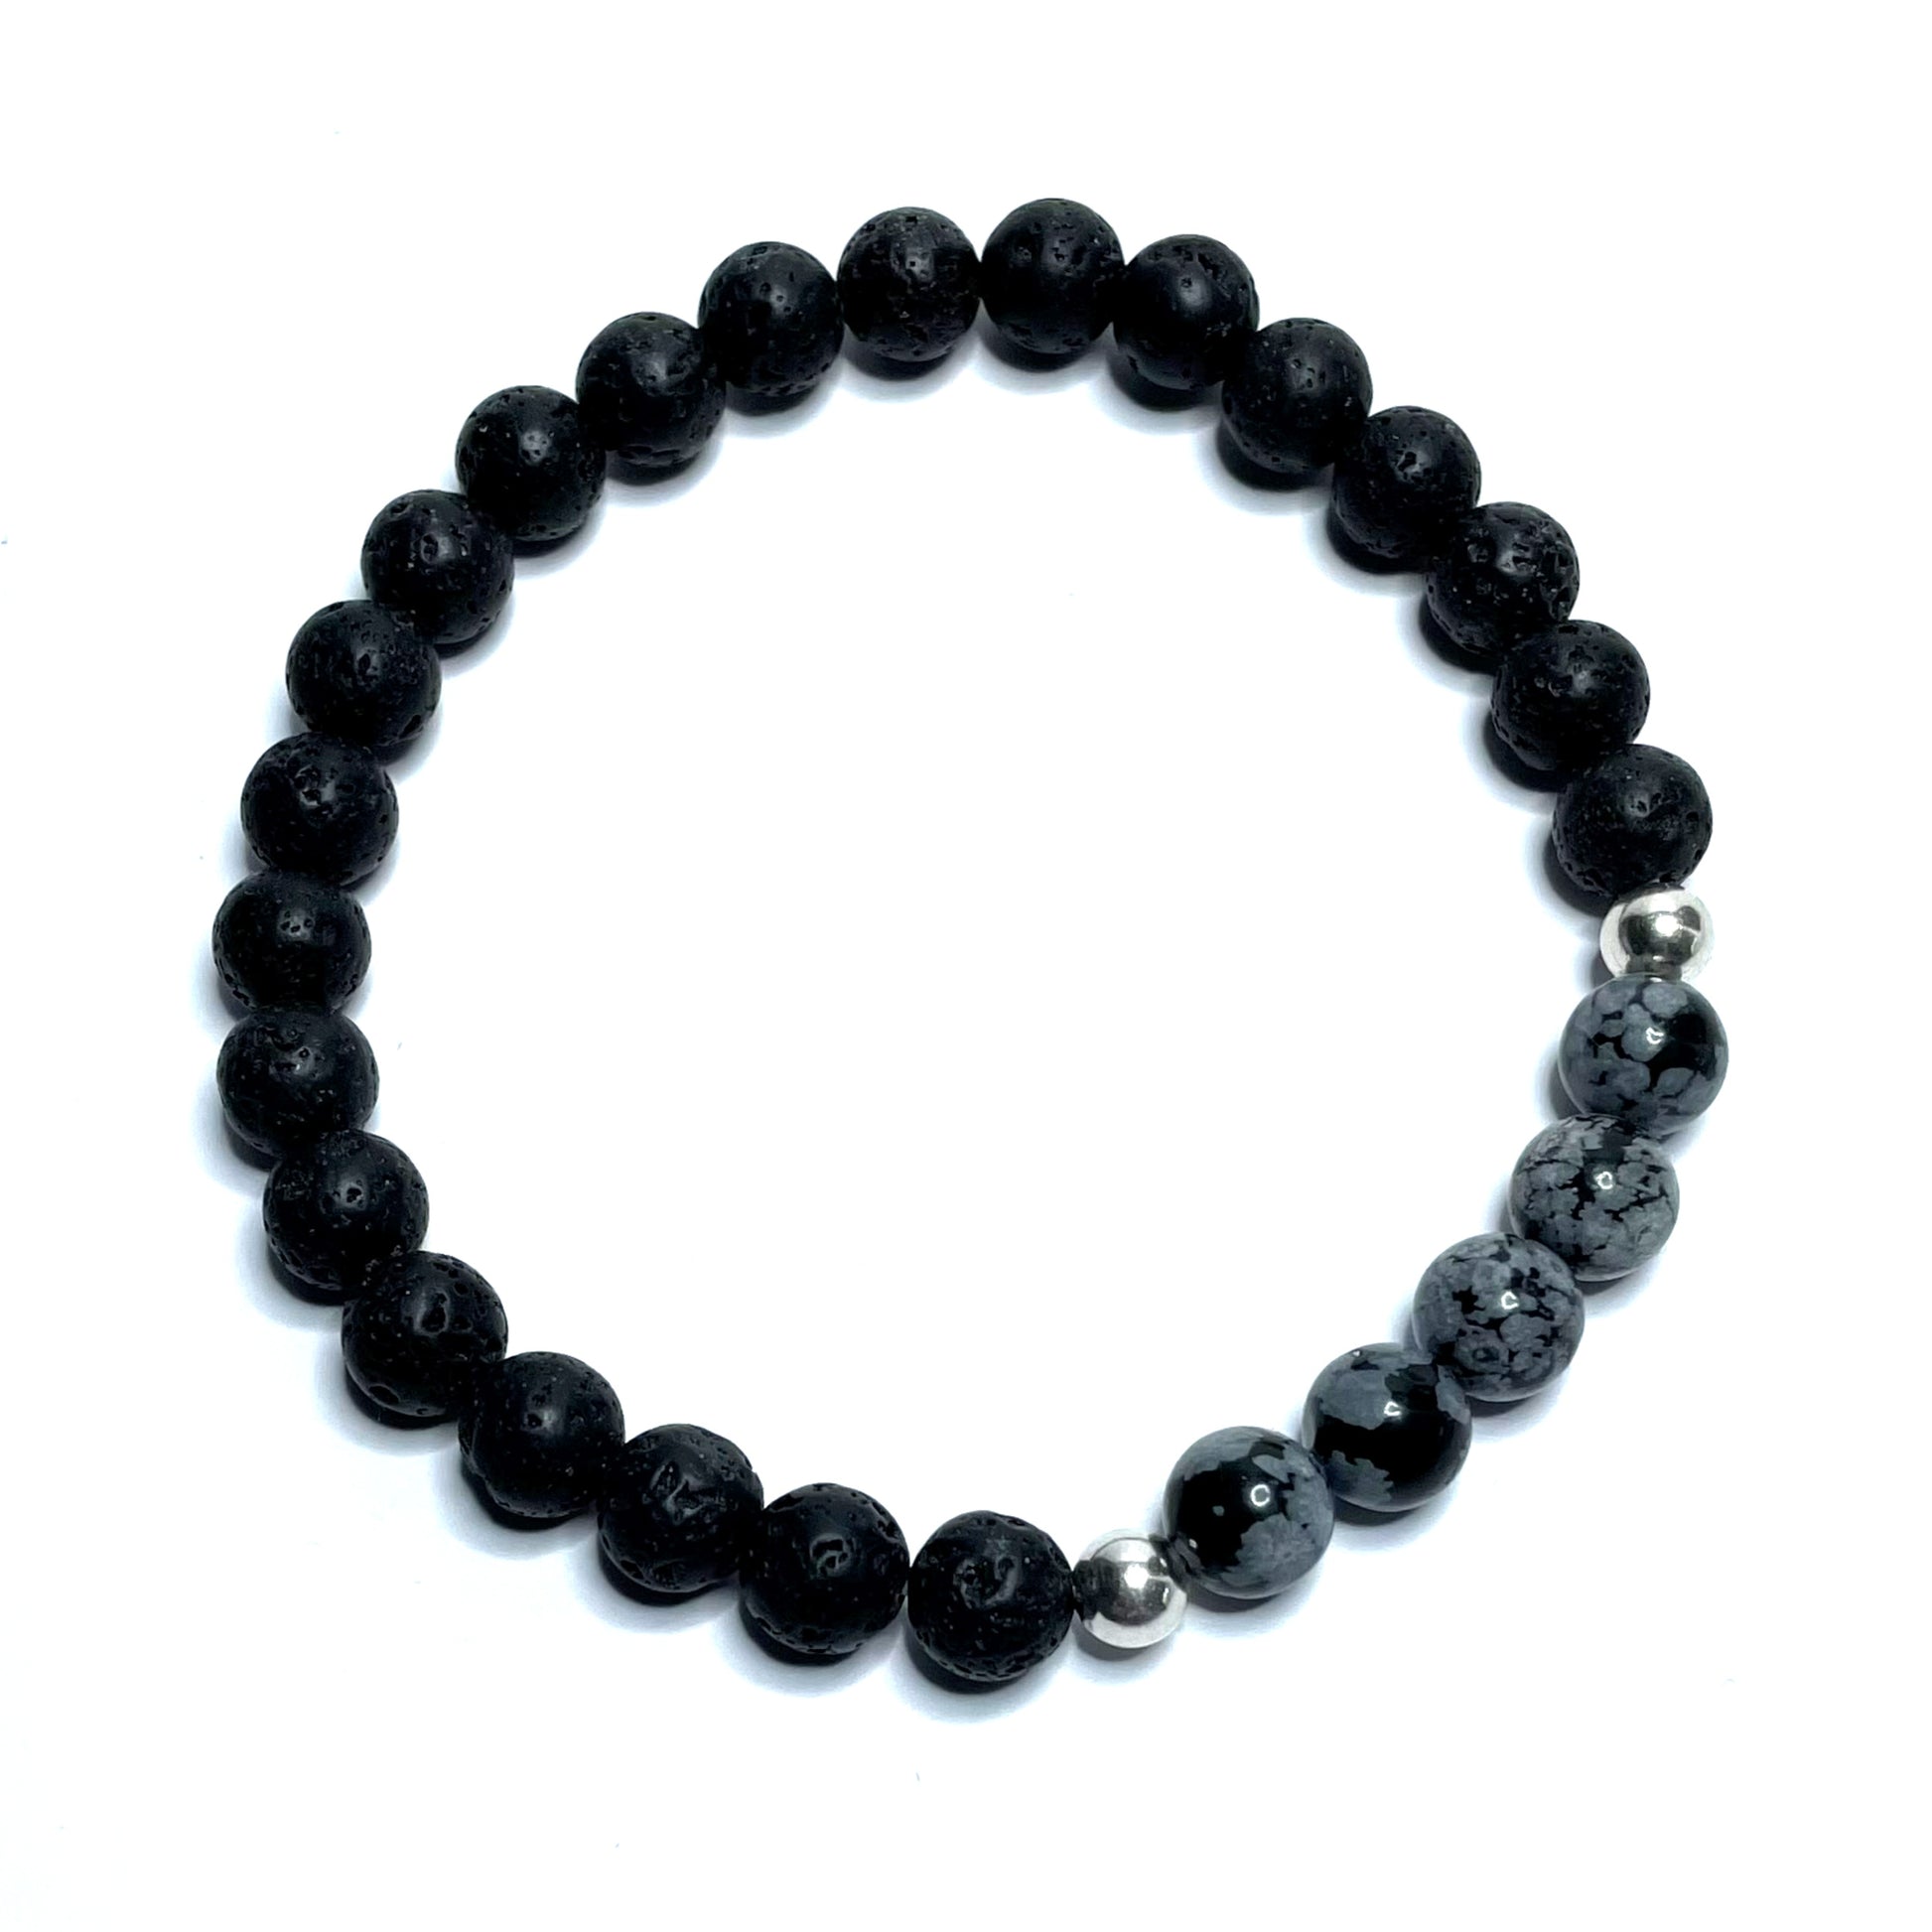 Snowflake obsidian bracelet with lava rock beads